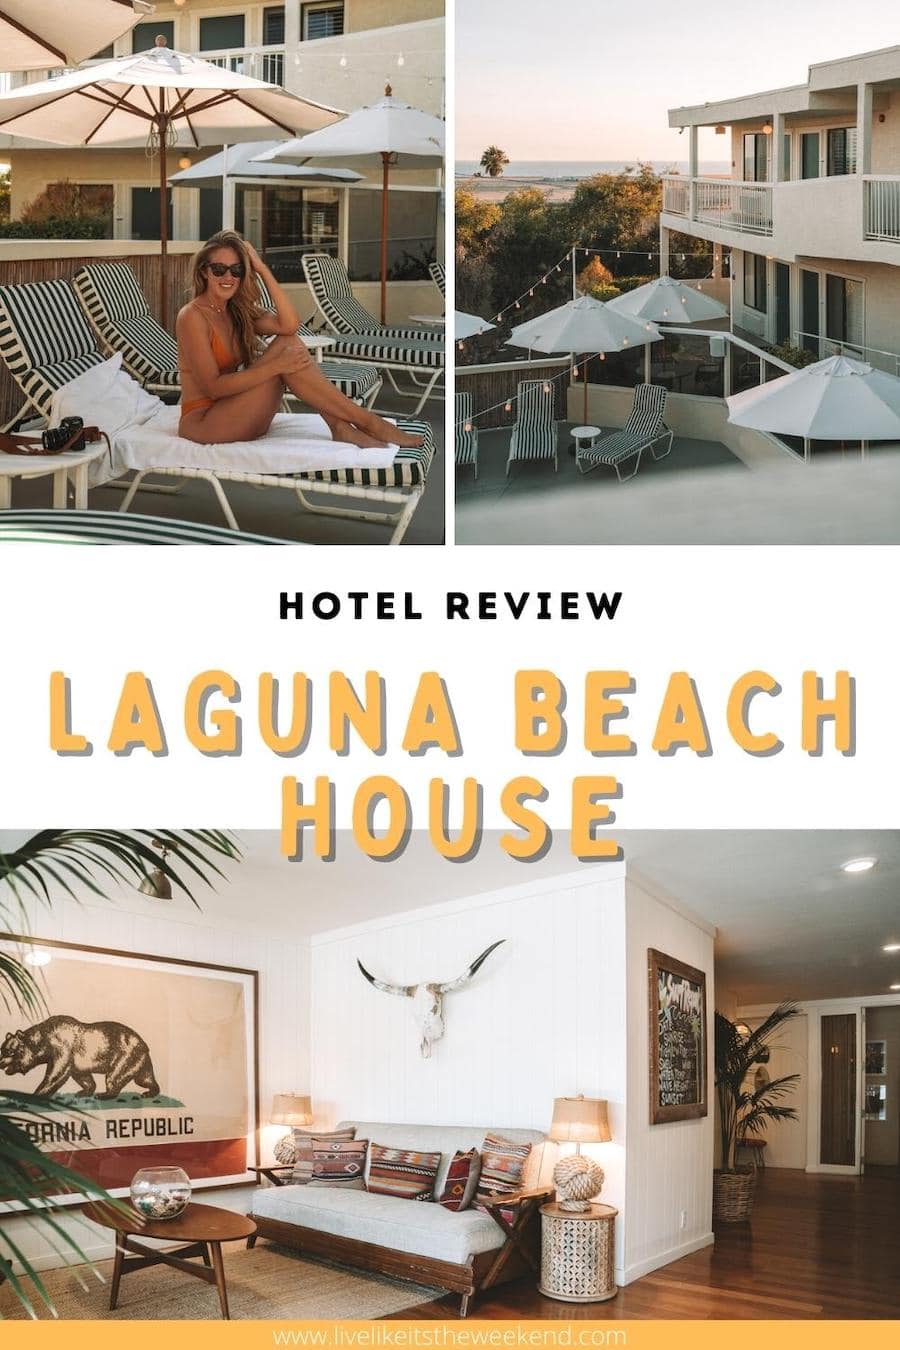 Portada de pinterest de la reseña del hotel Laguna Beach House